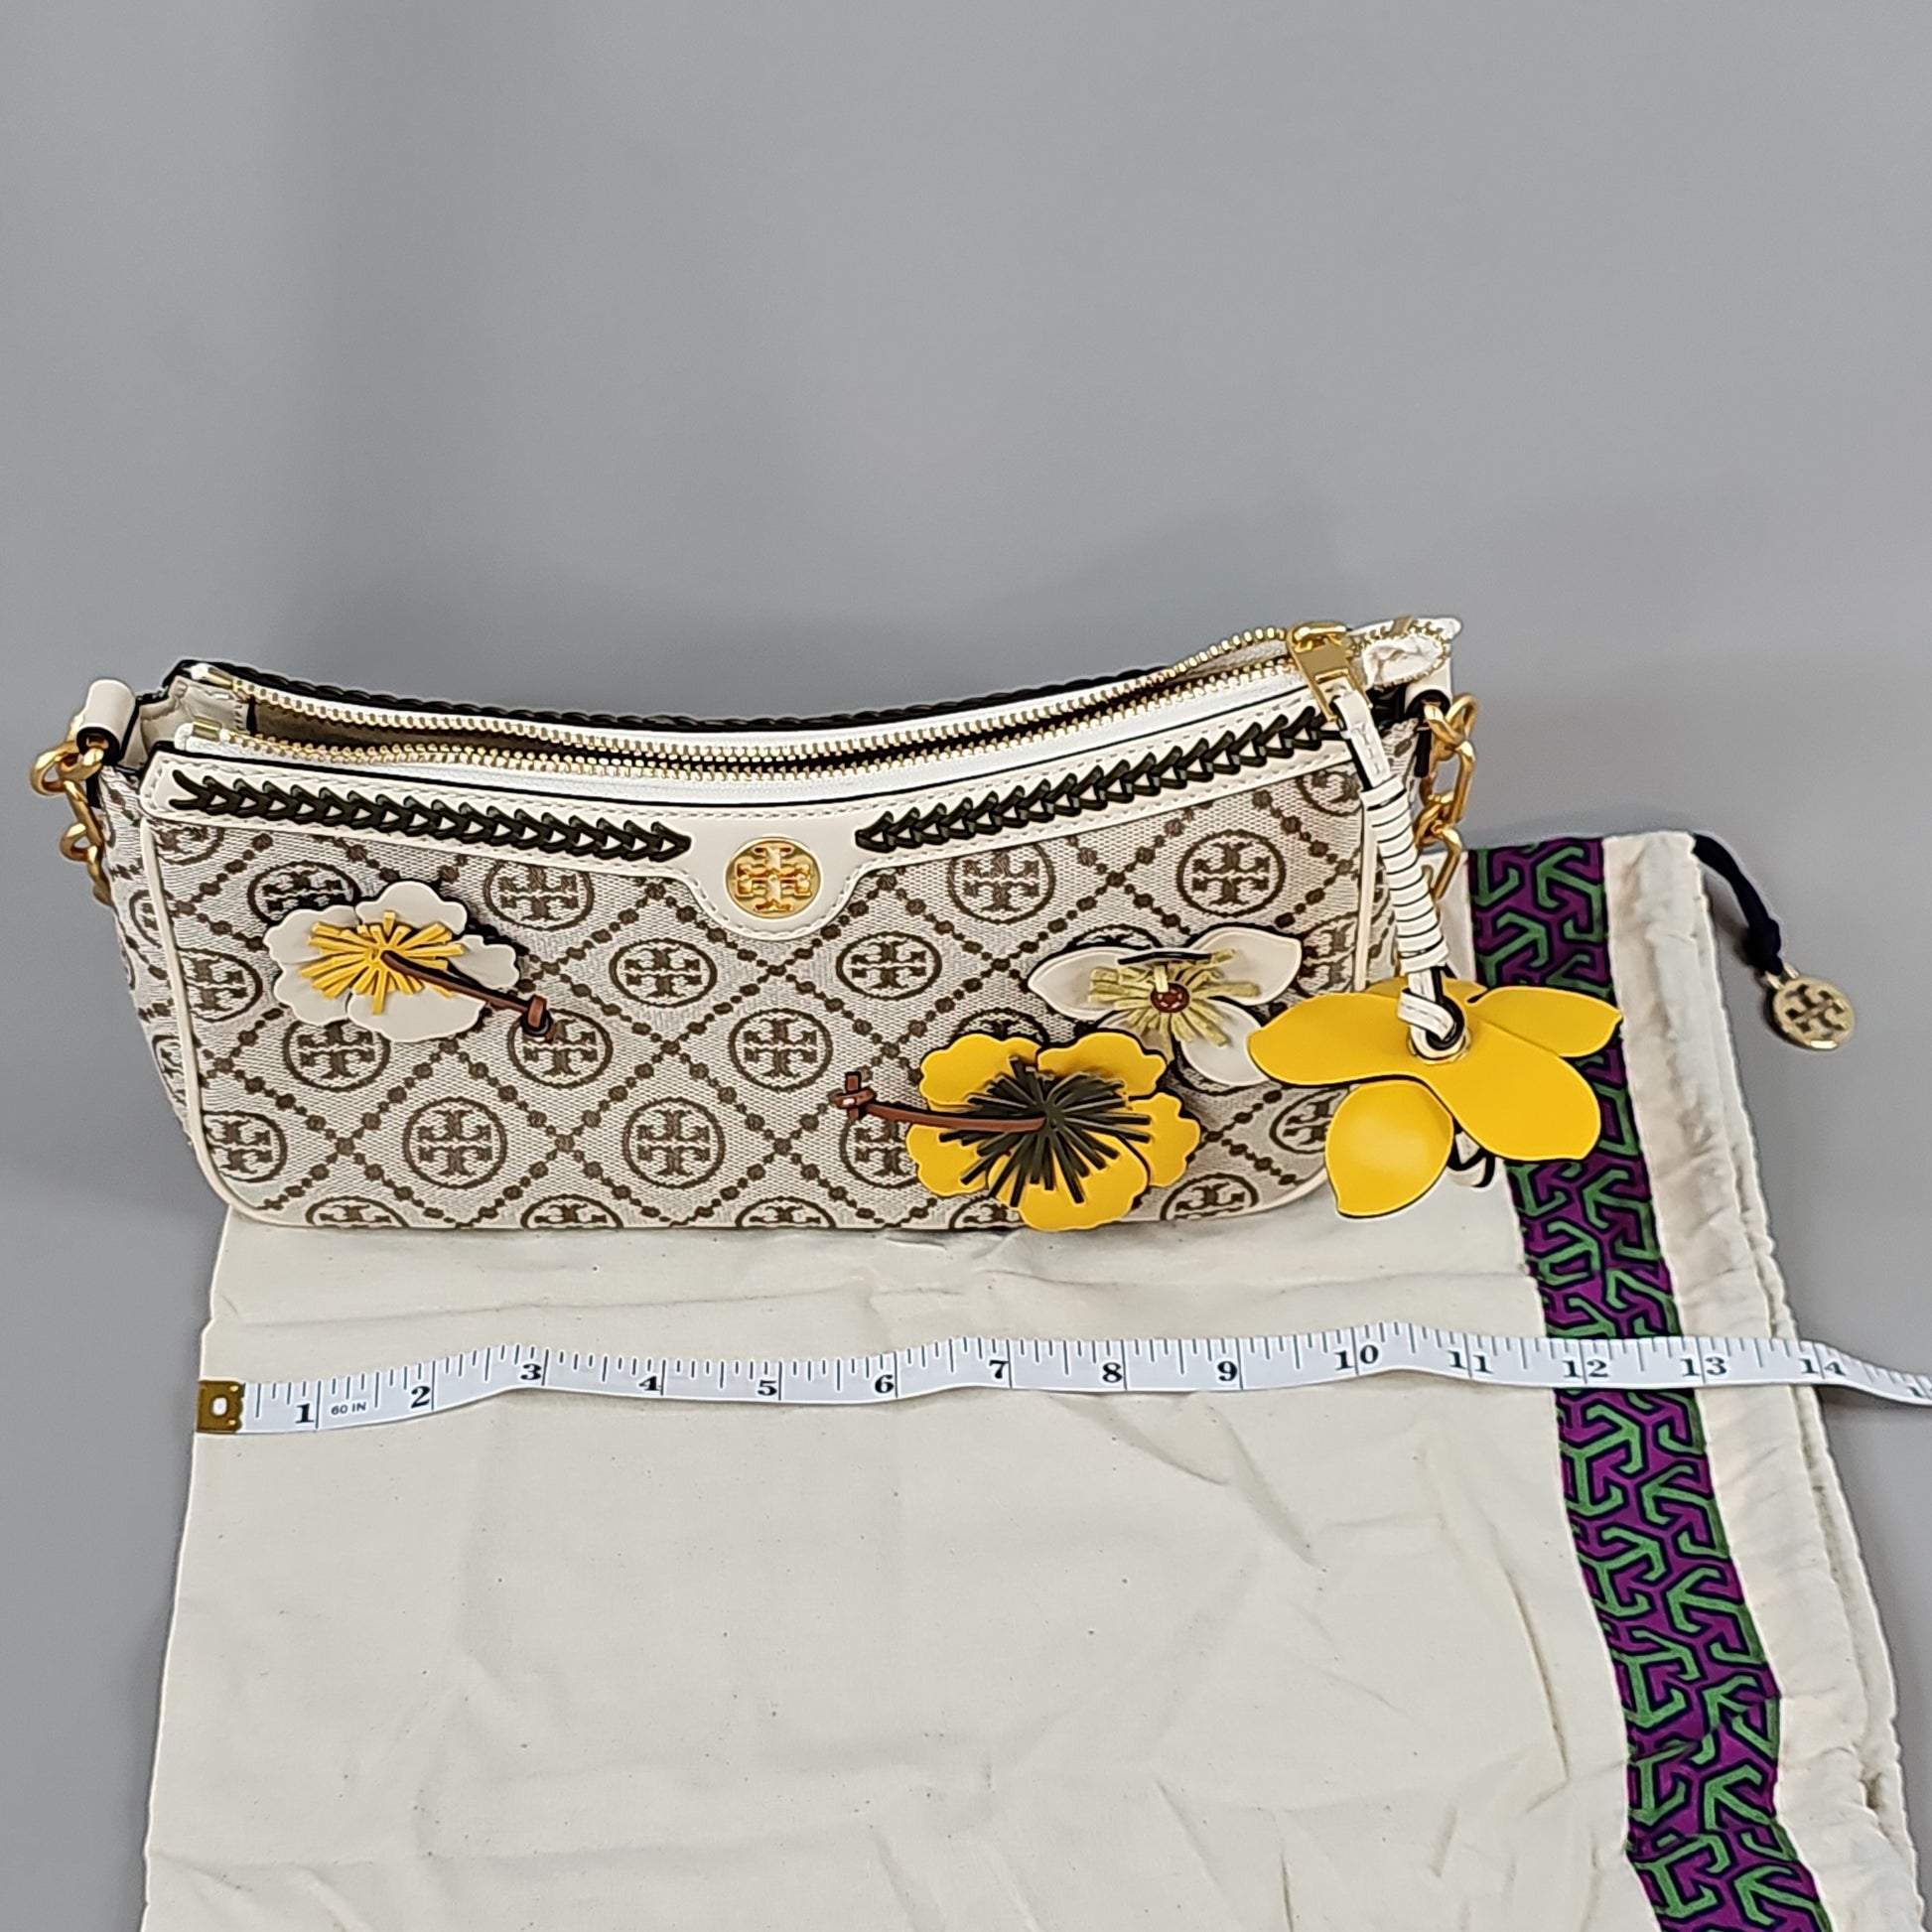 Tory Burch 88976 T Monogram Braided Floral Shoulder Bag in Hazelnut